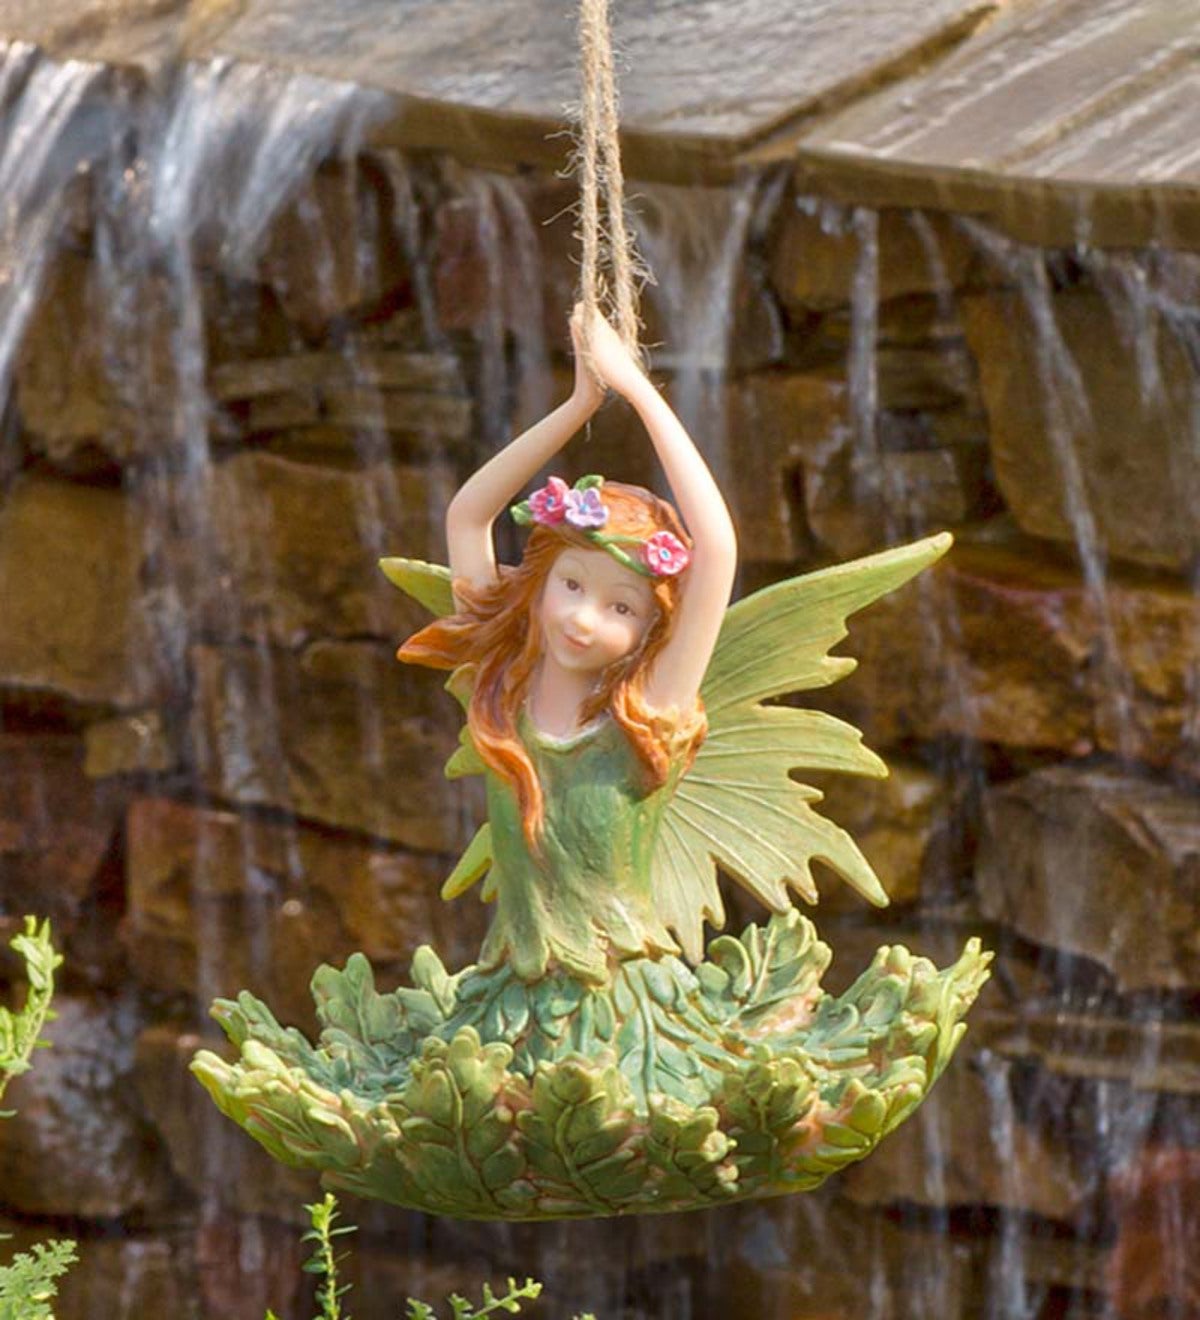 XIDAJIE Fairy Garden Fairies Figurine Boy and Girl Sitting On Swing Fairy Decorative Statue Garden Accessories for Fairy Garden Kits and Houses 